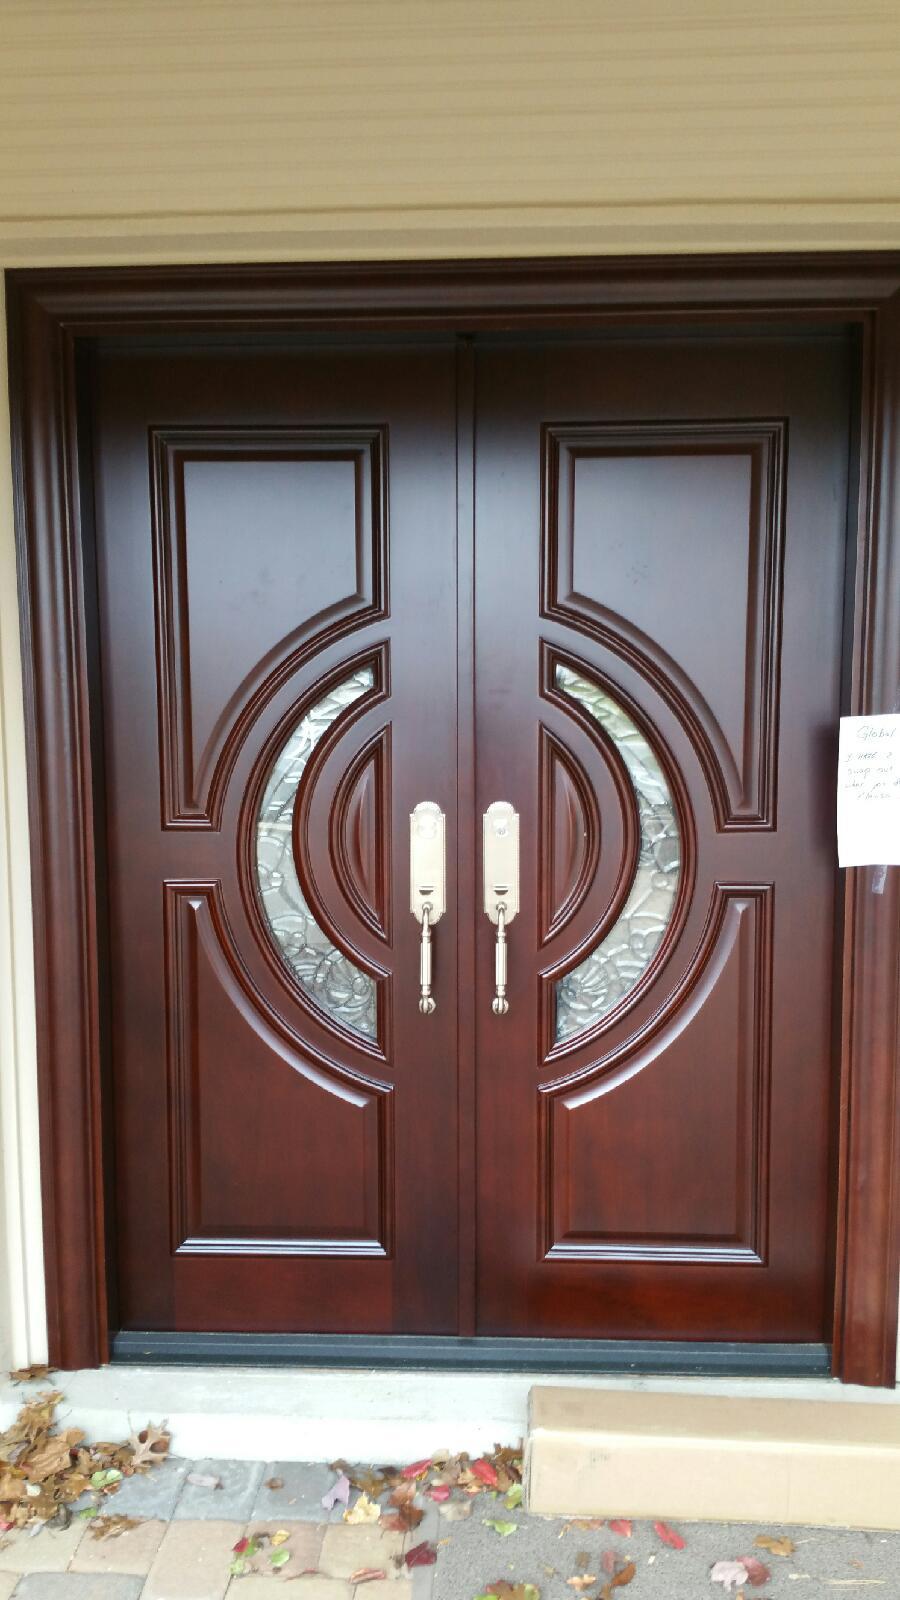  Mahogany  Front Double  Entry  Door  6 x 8 2 3 8 thick 